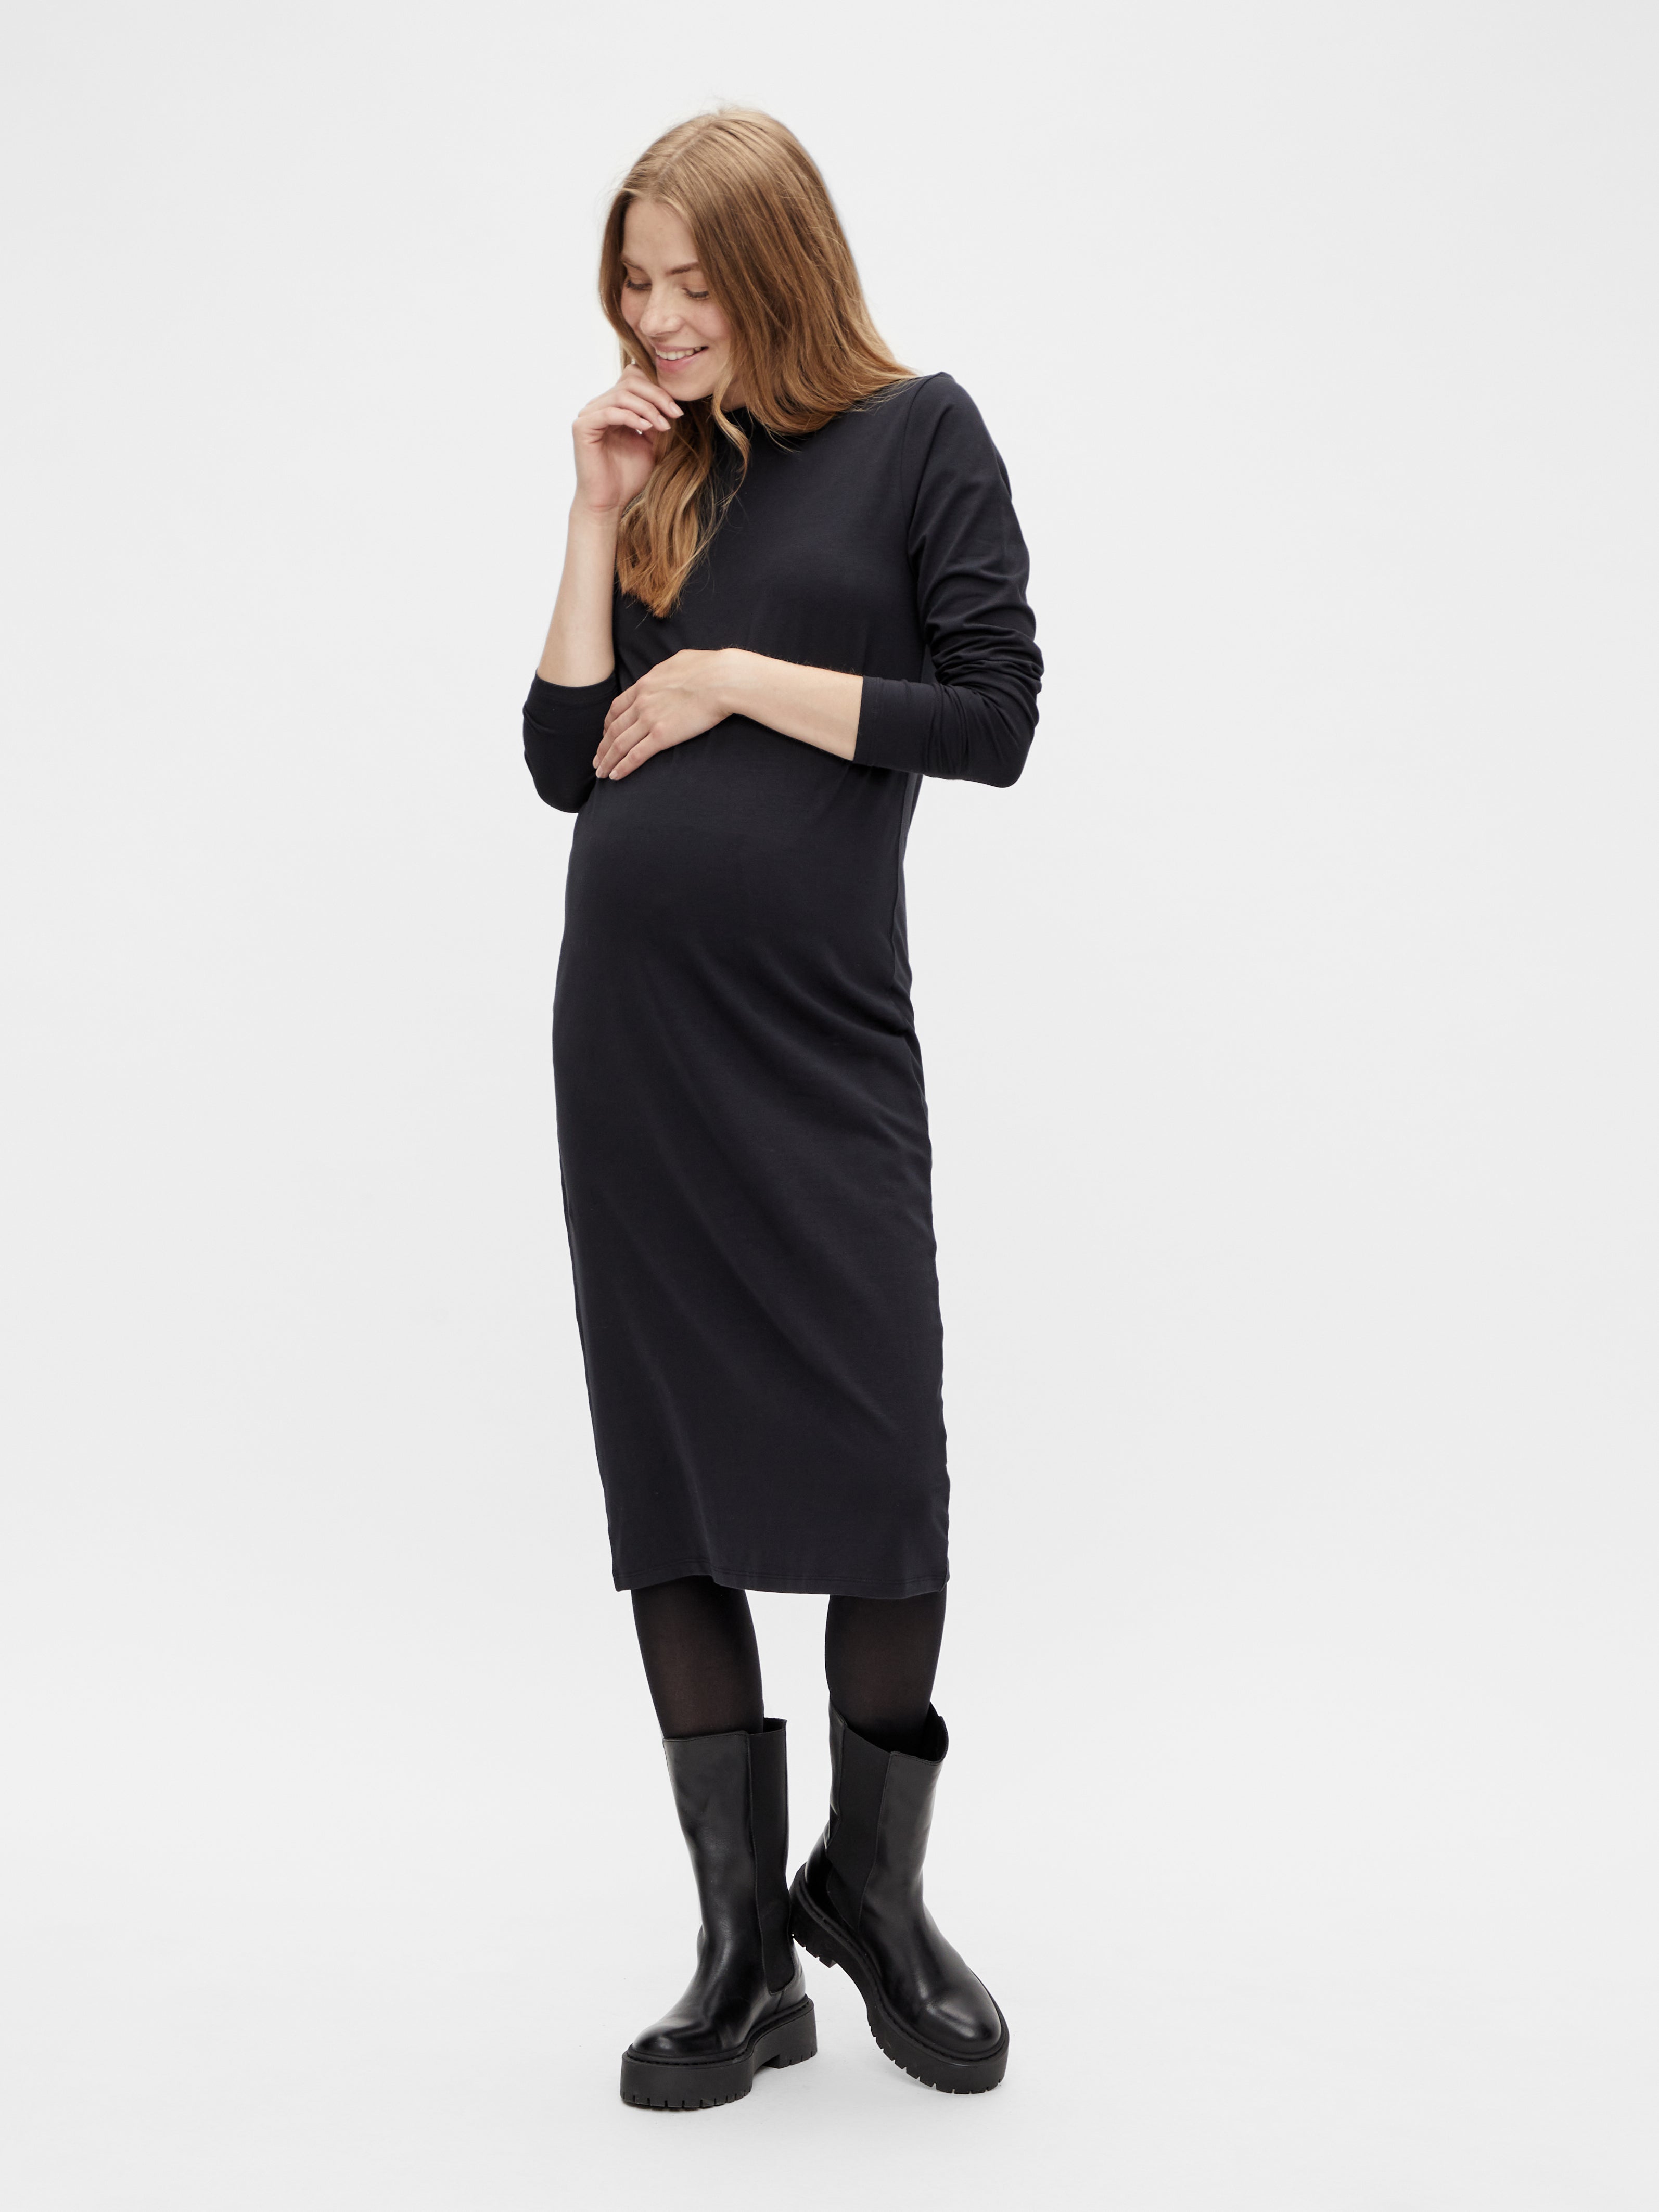 Ellis Maternity Tank Dress in Caviar Black - hautemama